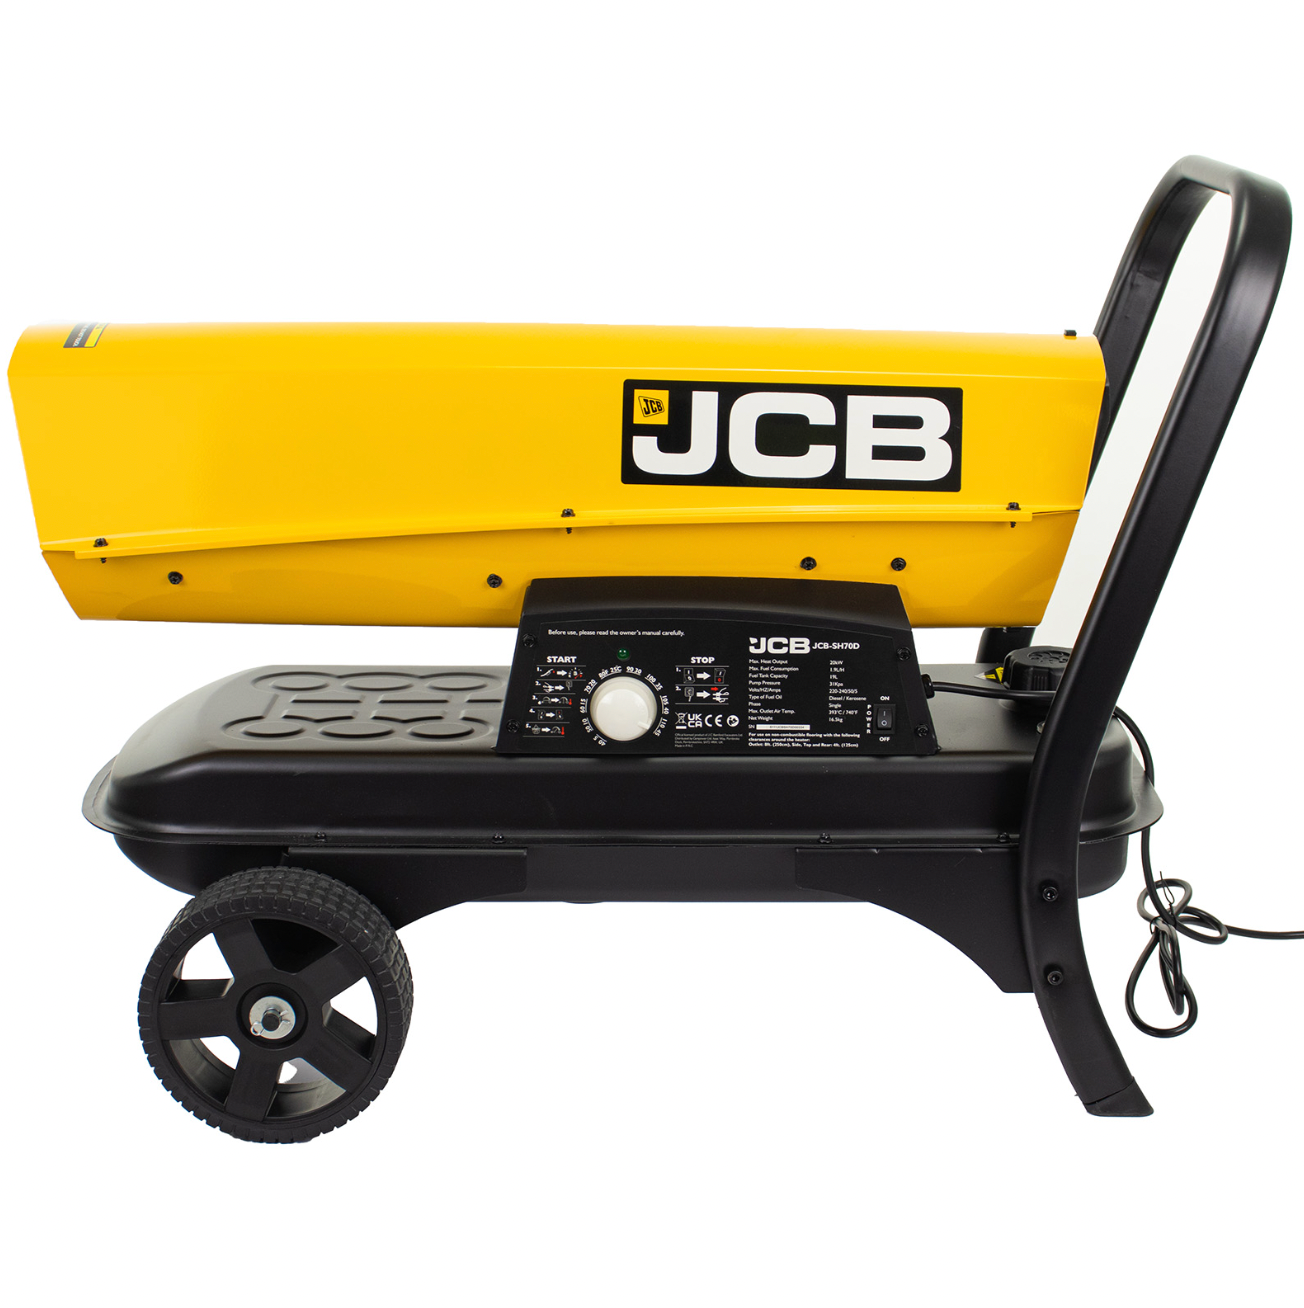 JCB 70,000BTU Diesel Space Heater - 20kW, 496m³ Coverage, Dual Fuel (Kerosene/Diesel), Thermostat Control